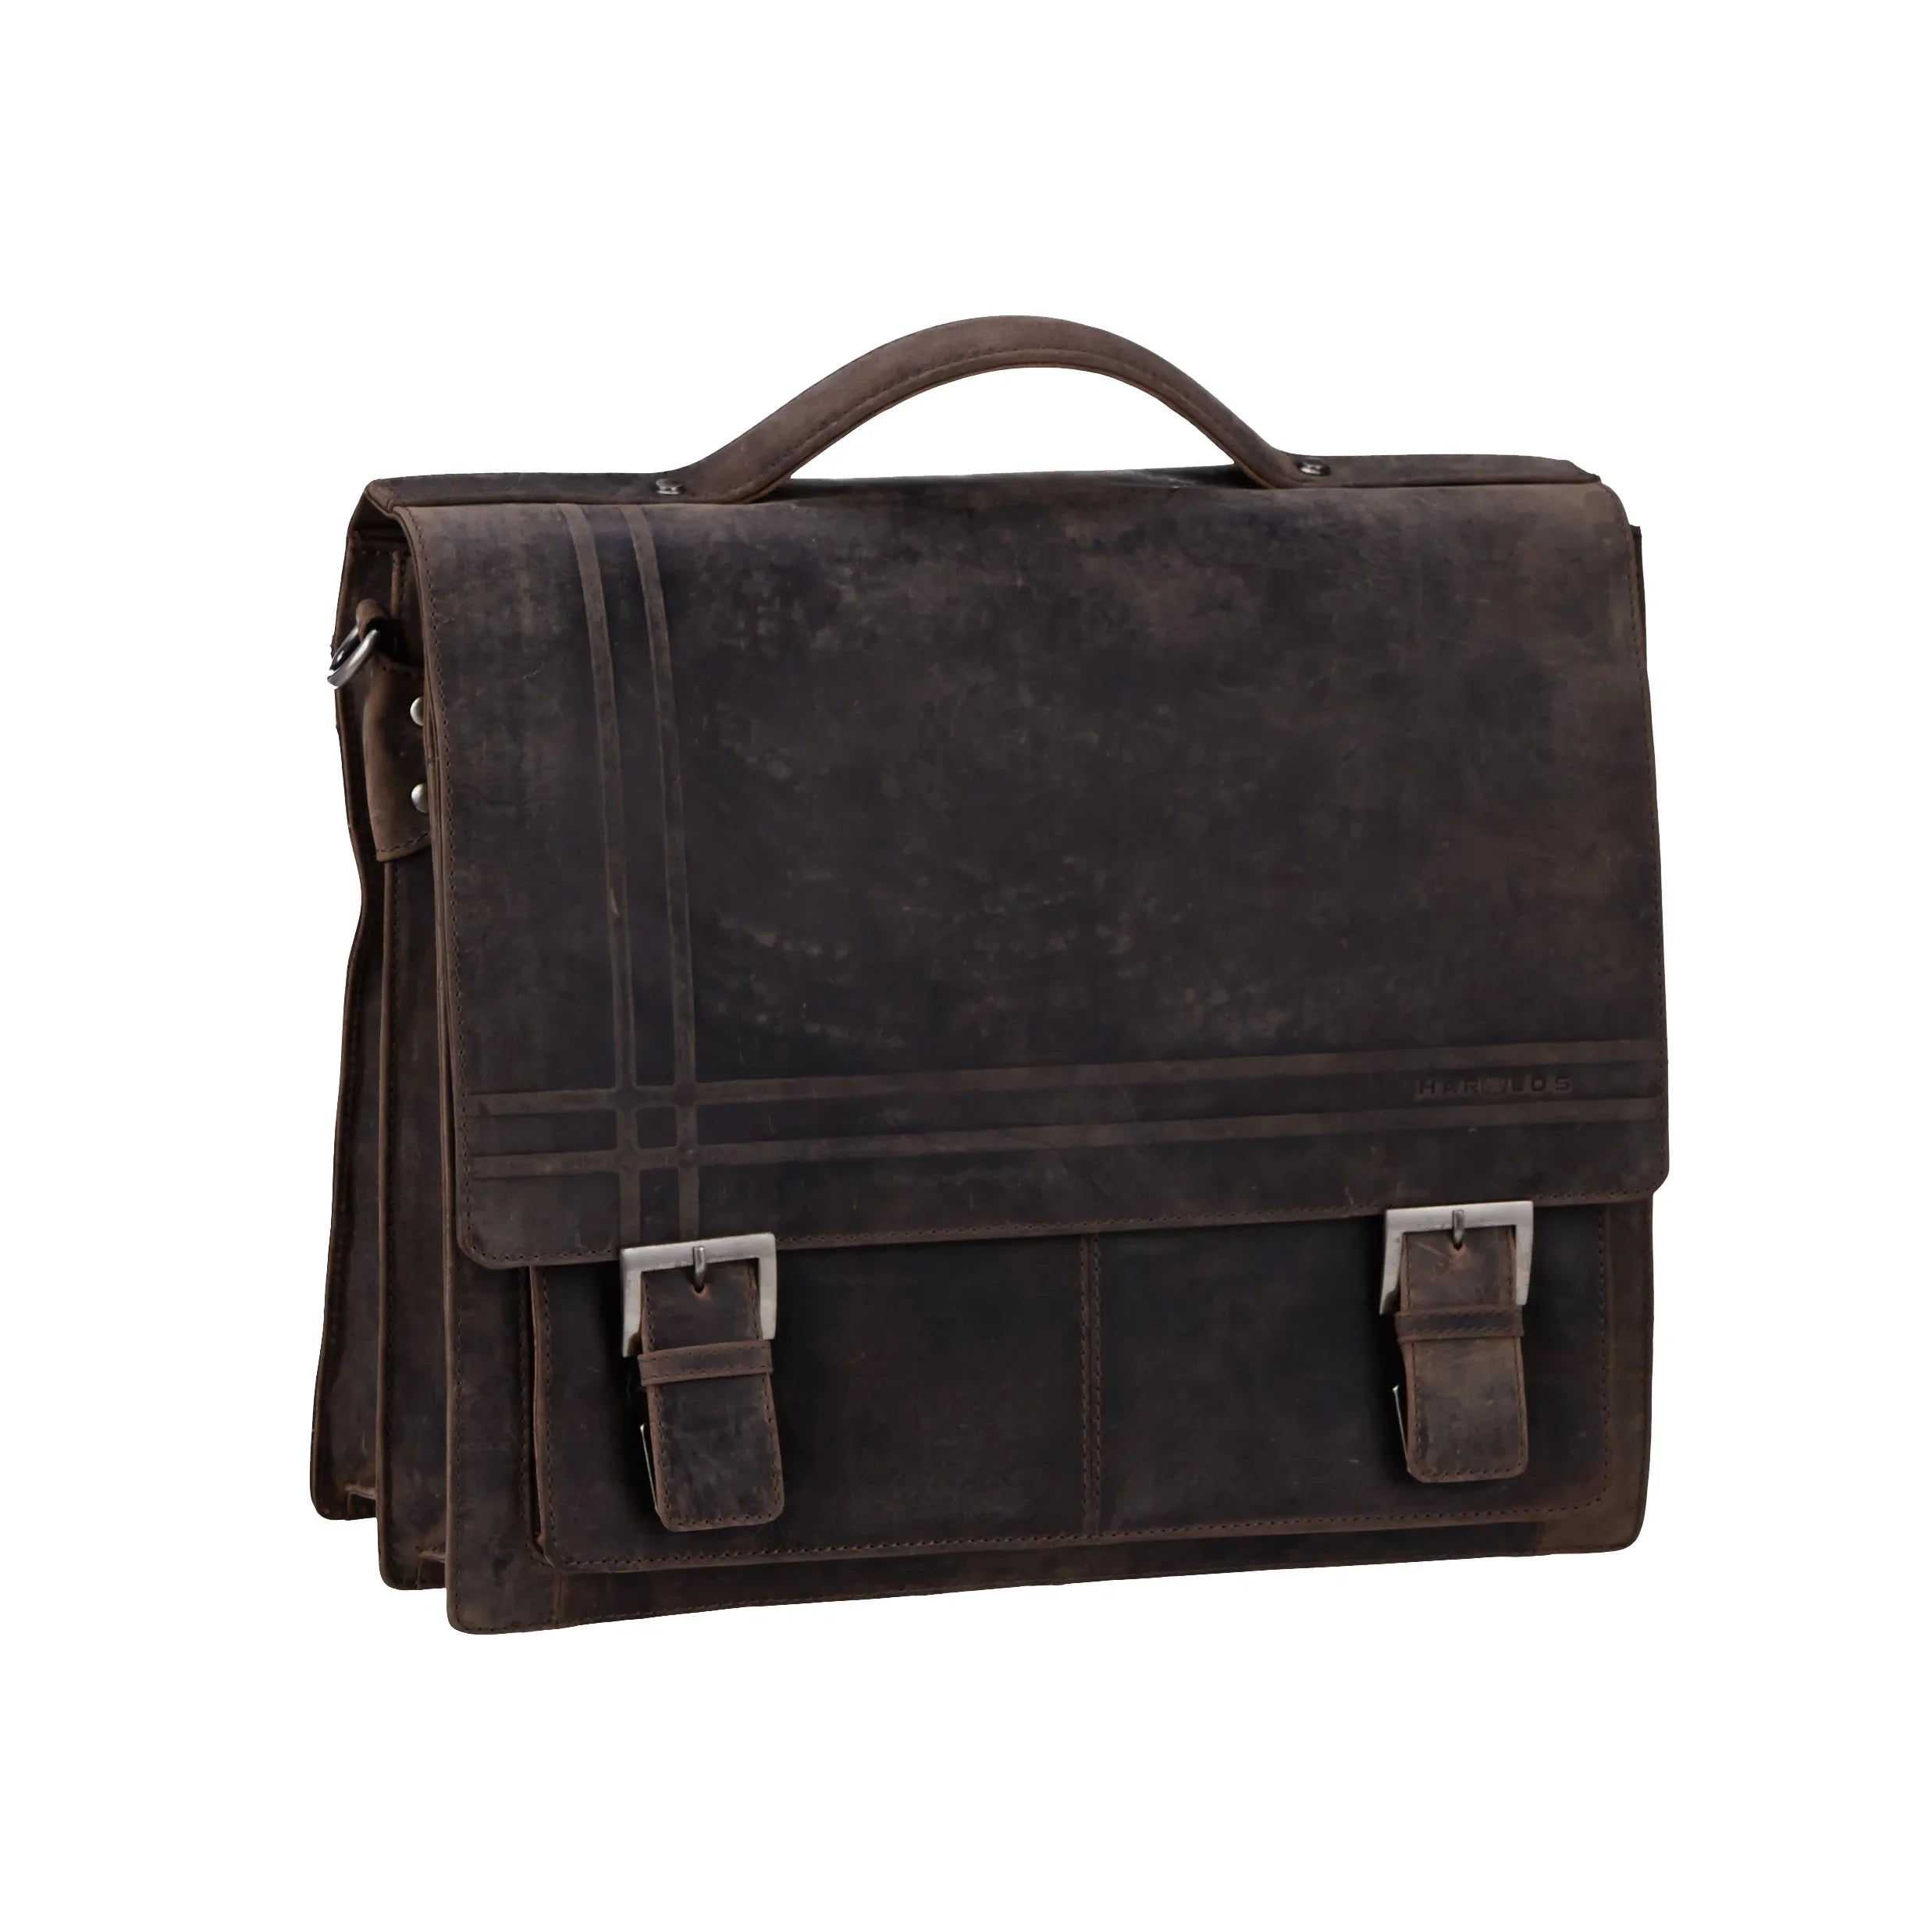 Harolds Concaro briefcase 40 cm - taupe